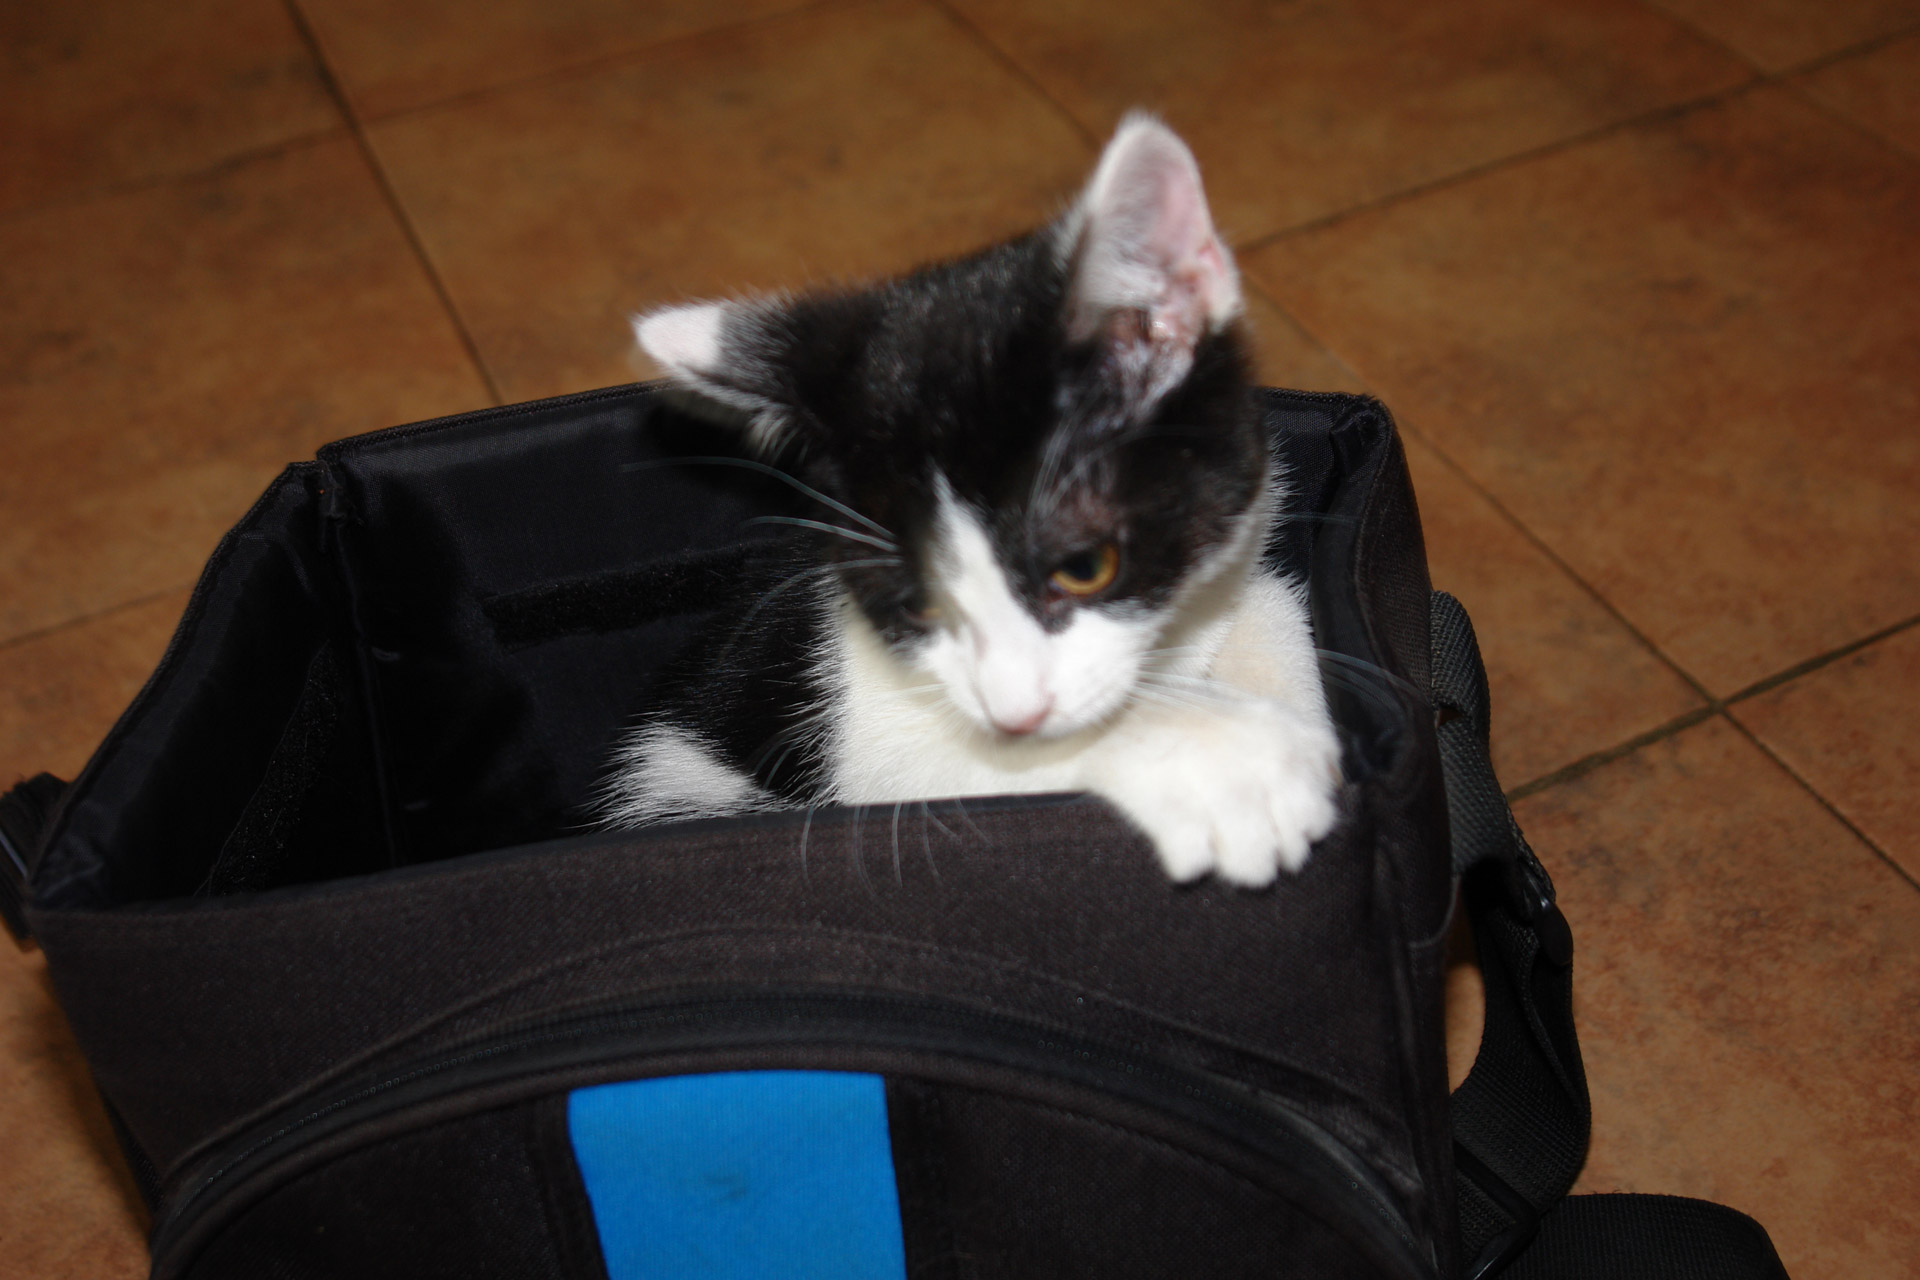 Kitten in camera bag